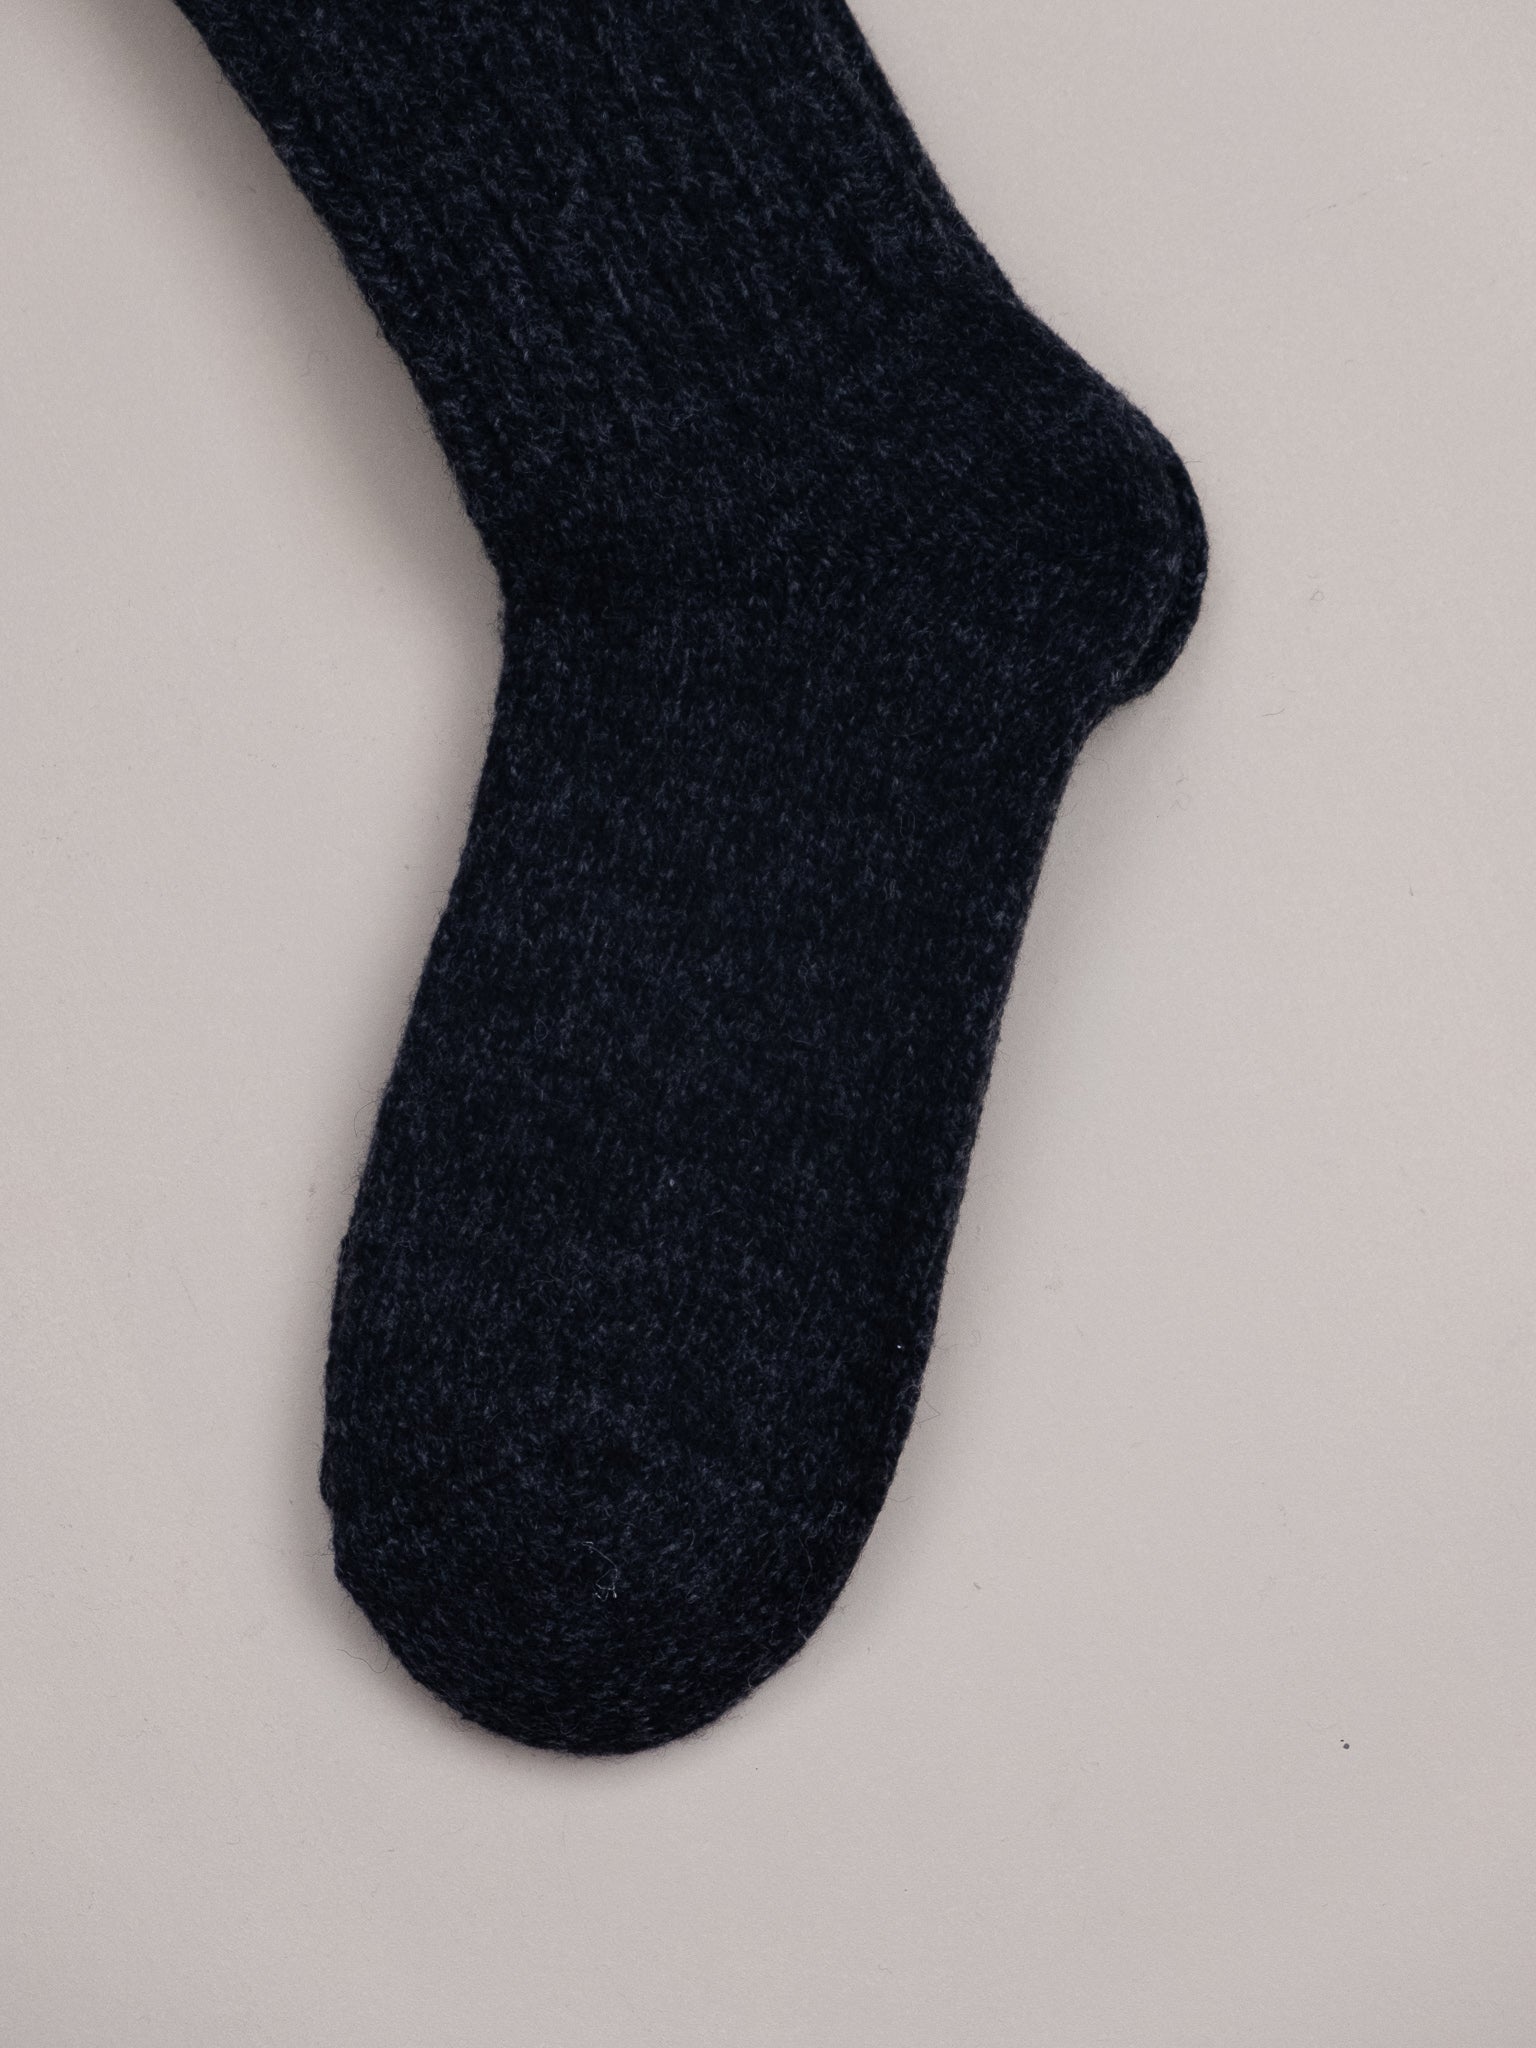 Ribbed Wool Socks - Charcoal